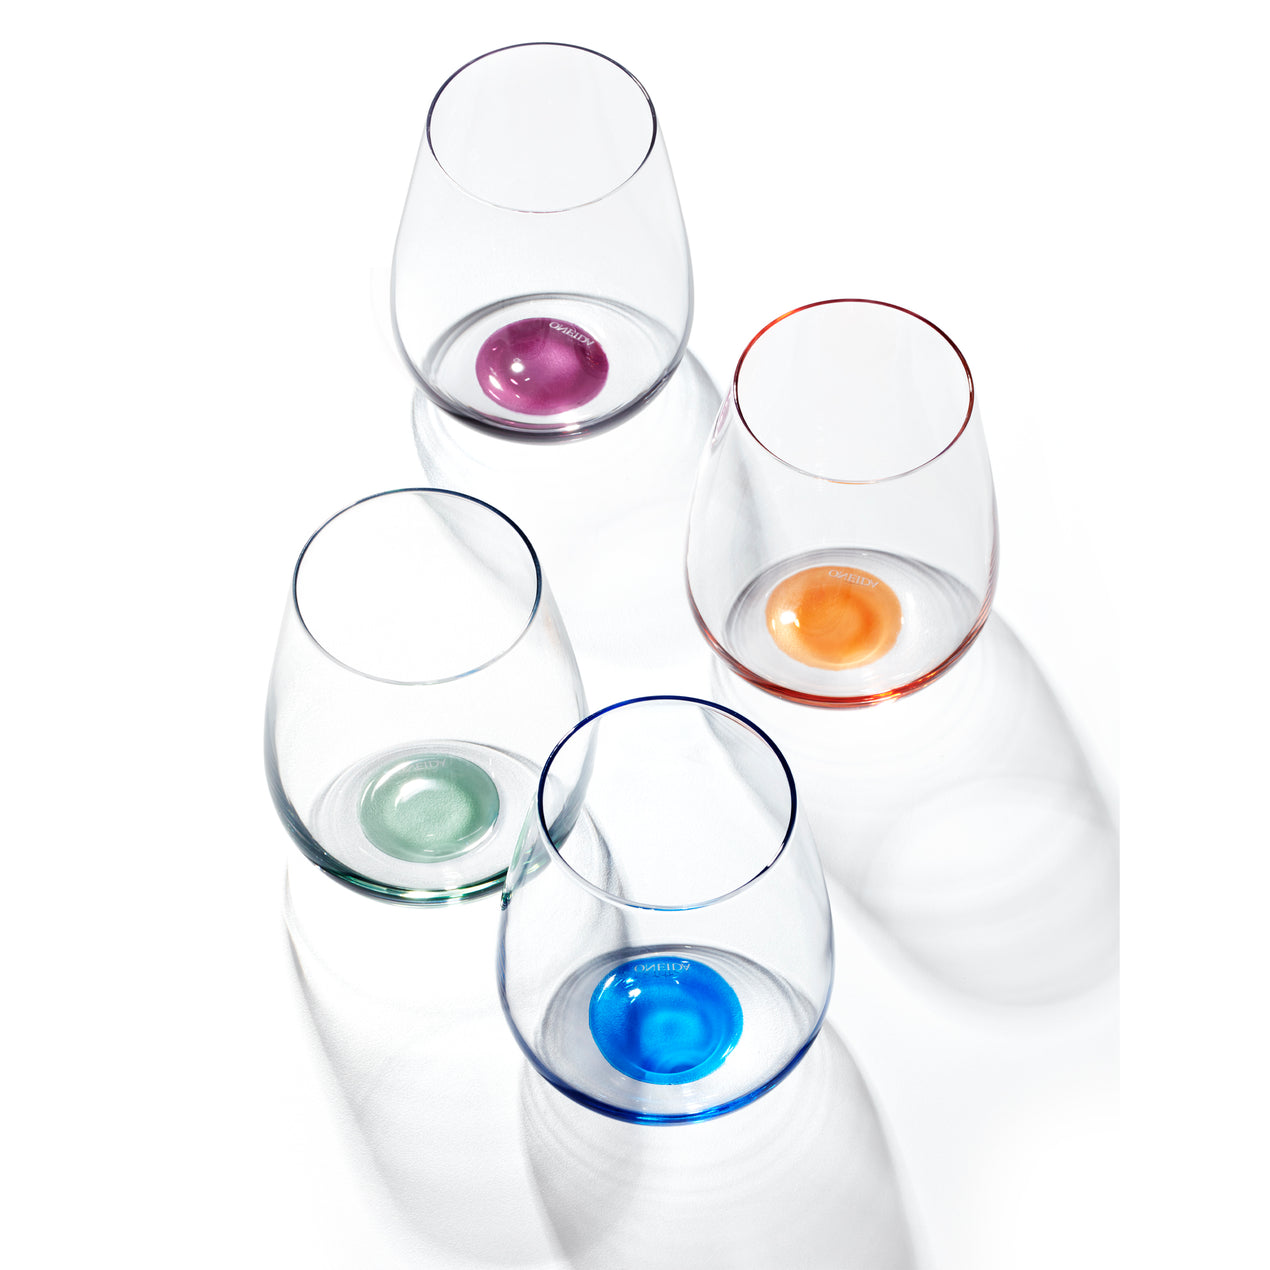 Oneida Set of 4 Mingle Wine Glasses